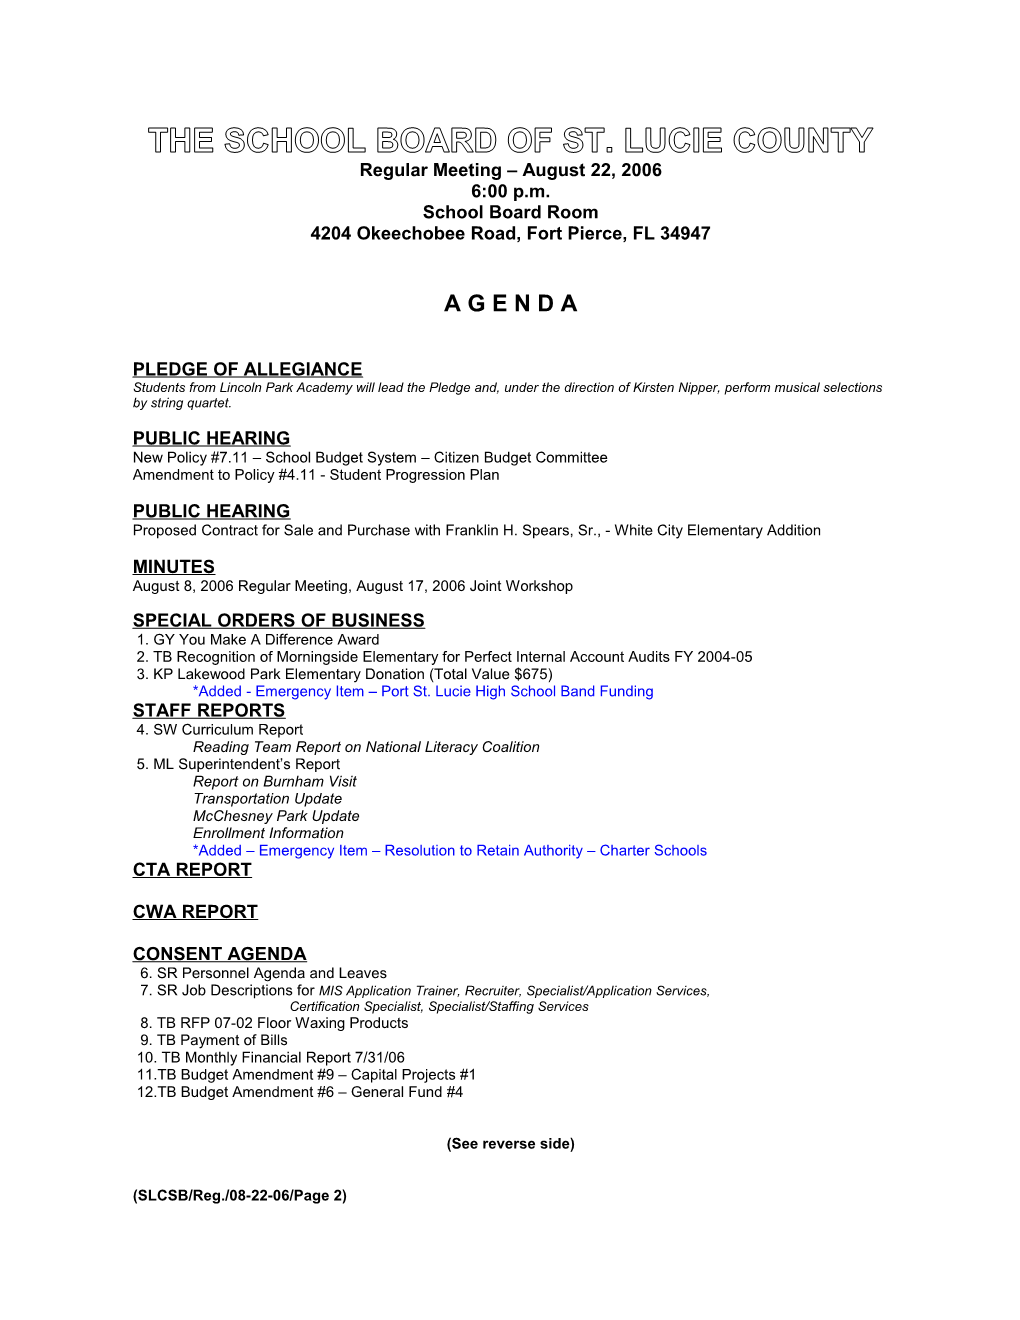 08-22-06 SLCSB Regular Meeting Agenda - Final